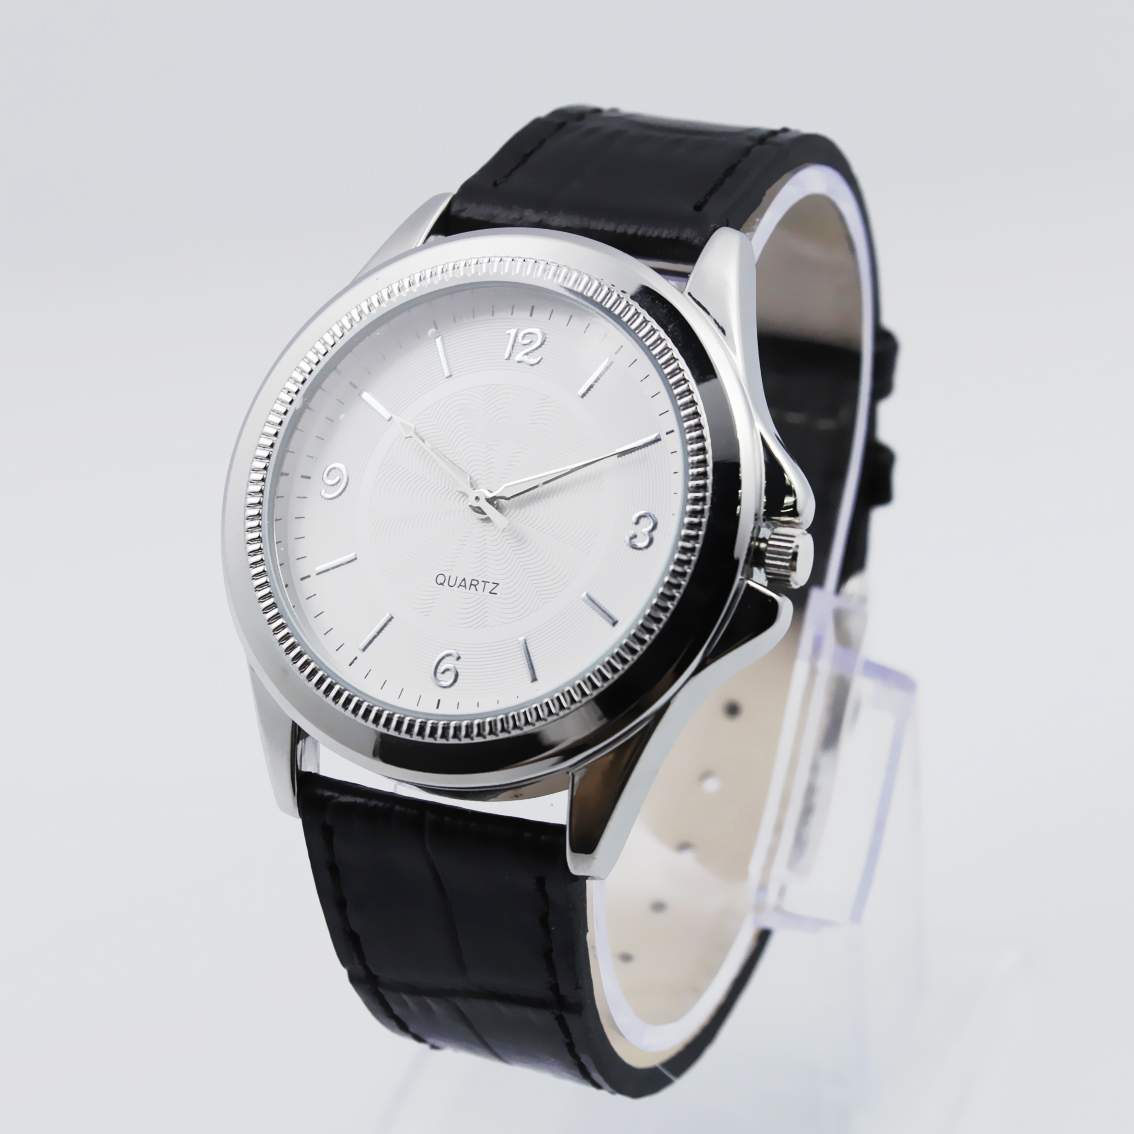 #02033Men's wristwatch quartz analog leather strap watch